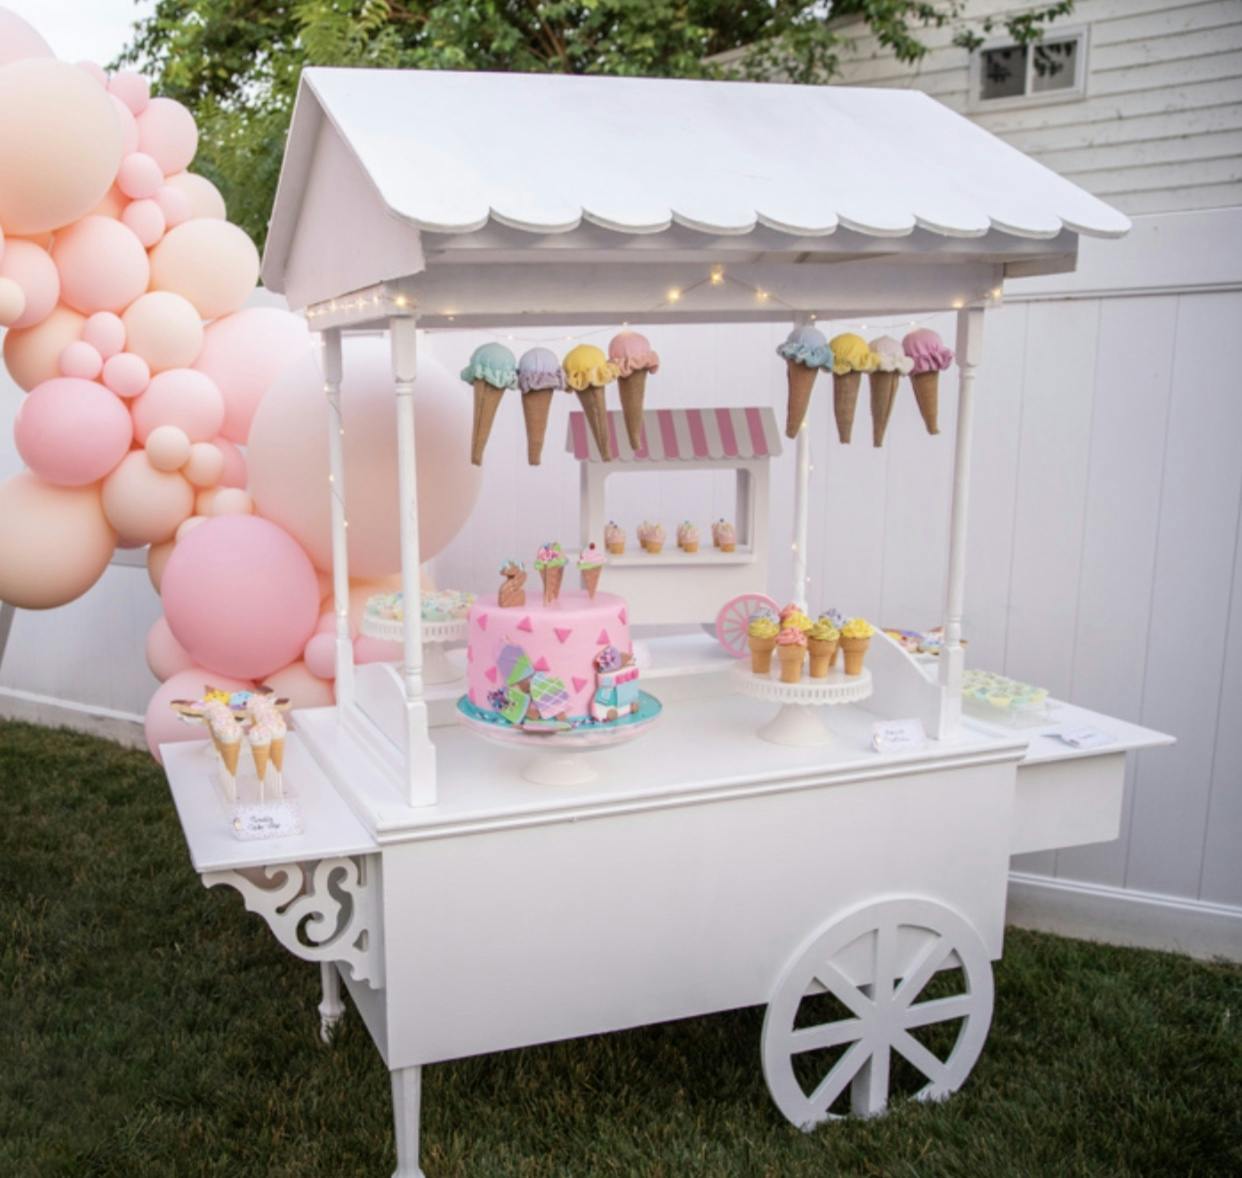 "Two Sweet" Ice Cream Themed Backyard Birthday Party